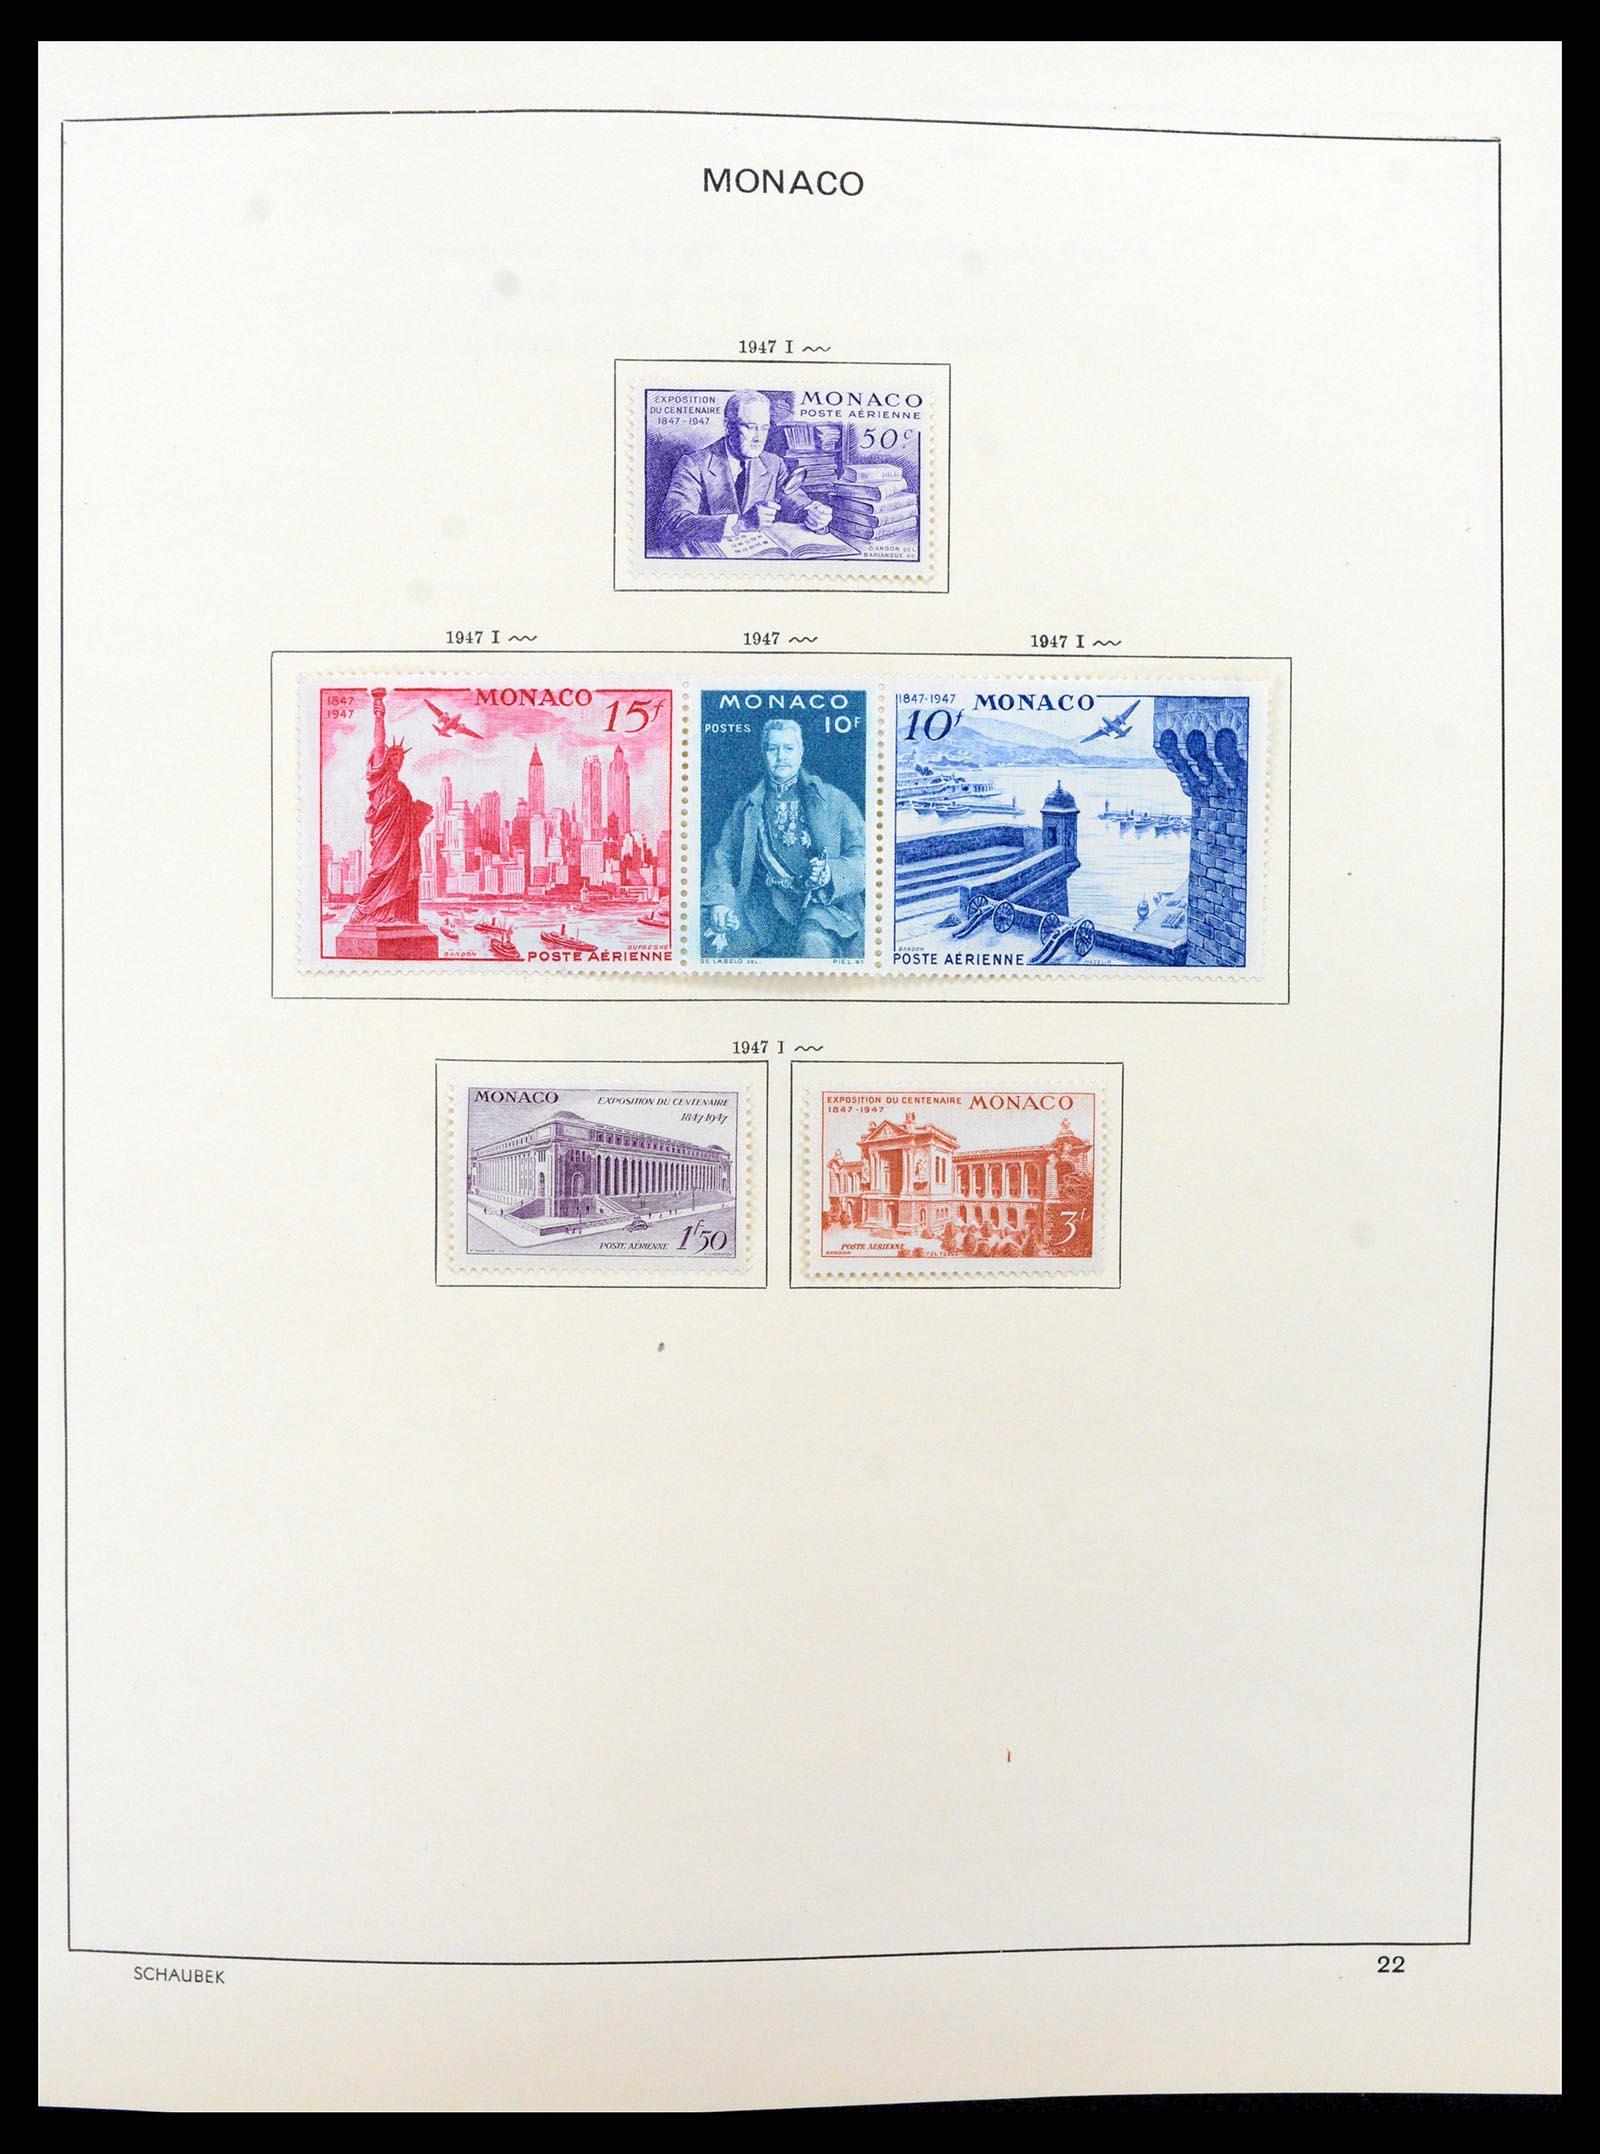 37570 022 - Stamp collection 37570 Monaco 1885-2013.